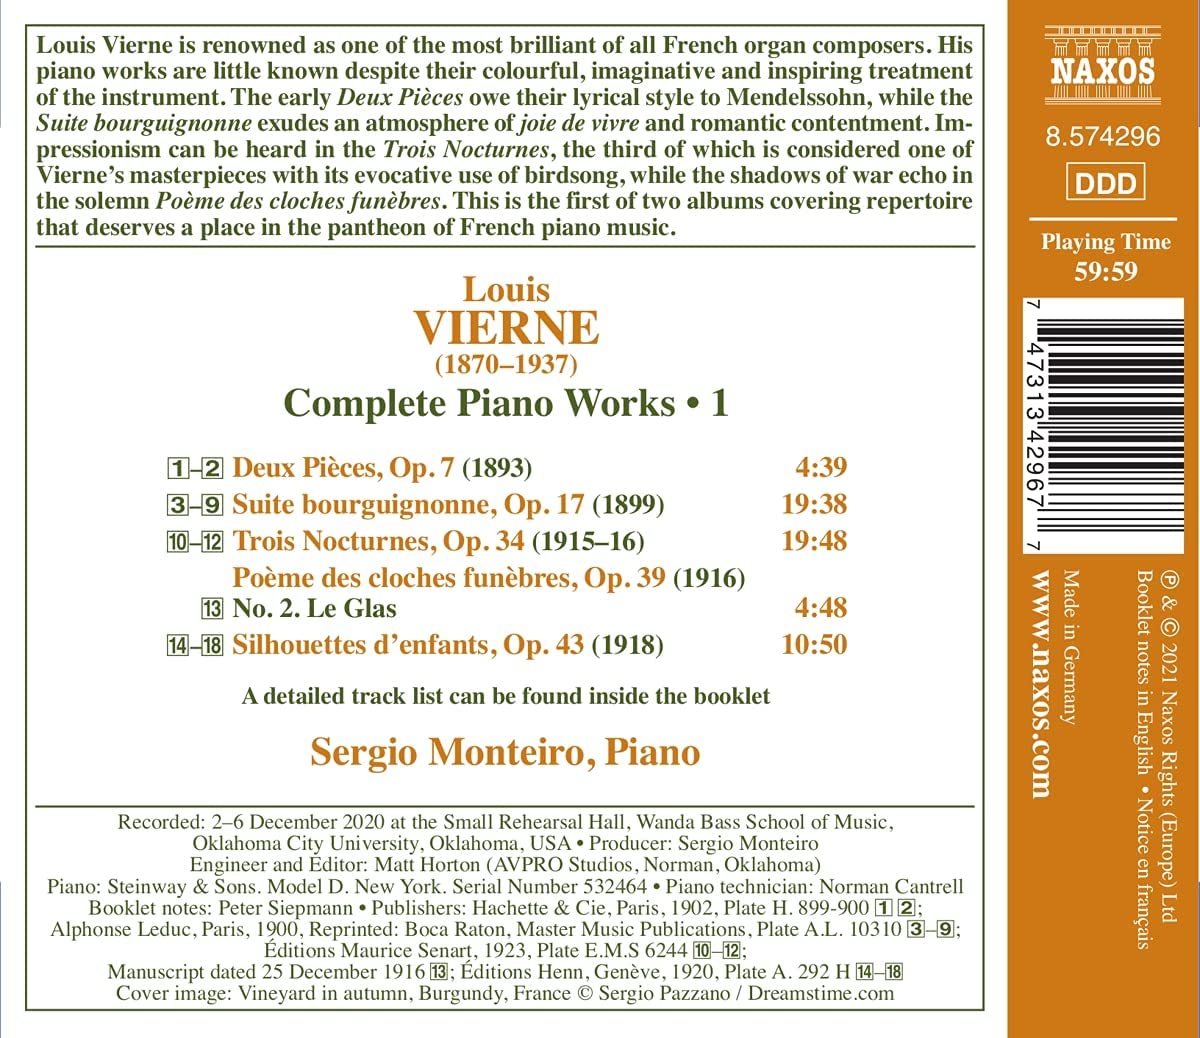 Sergio Monteiro 루이 비에른: 피아노 전곡 작품 1집 (Louis Vierne: Complete Piano Works Vol. 1) 